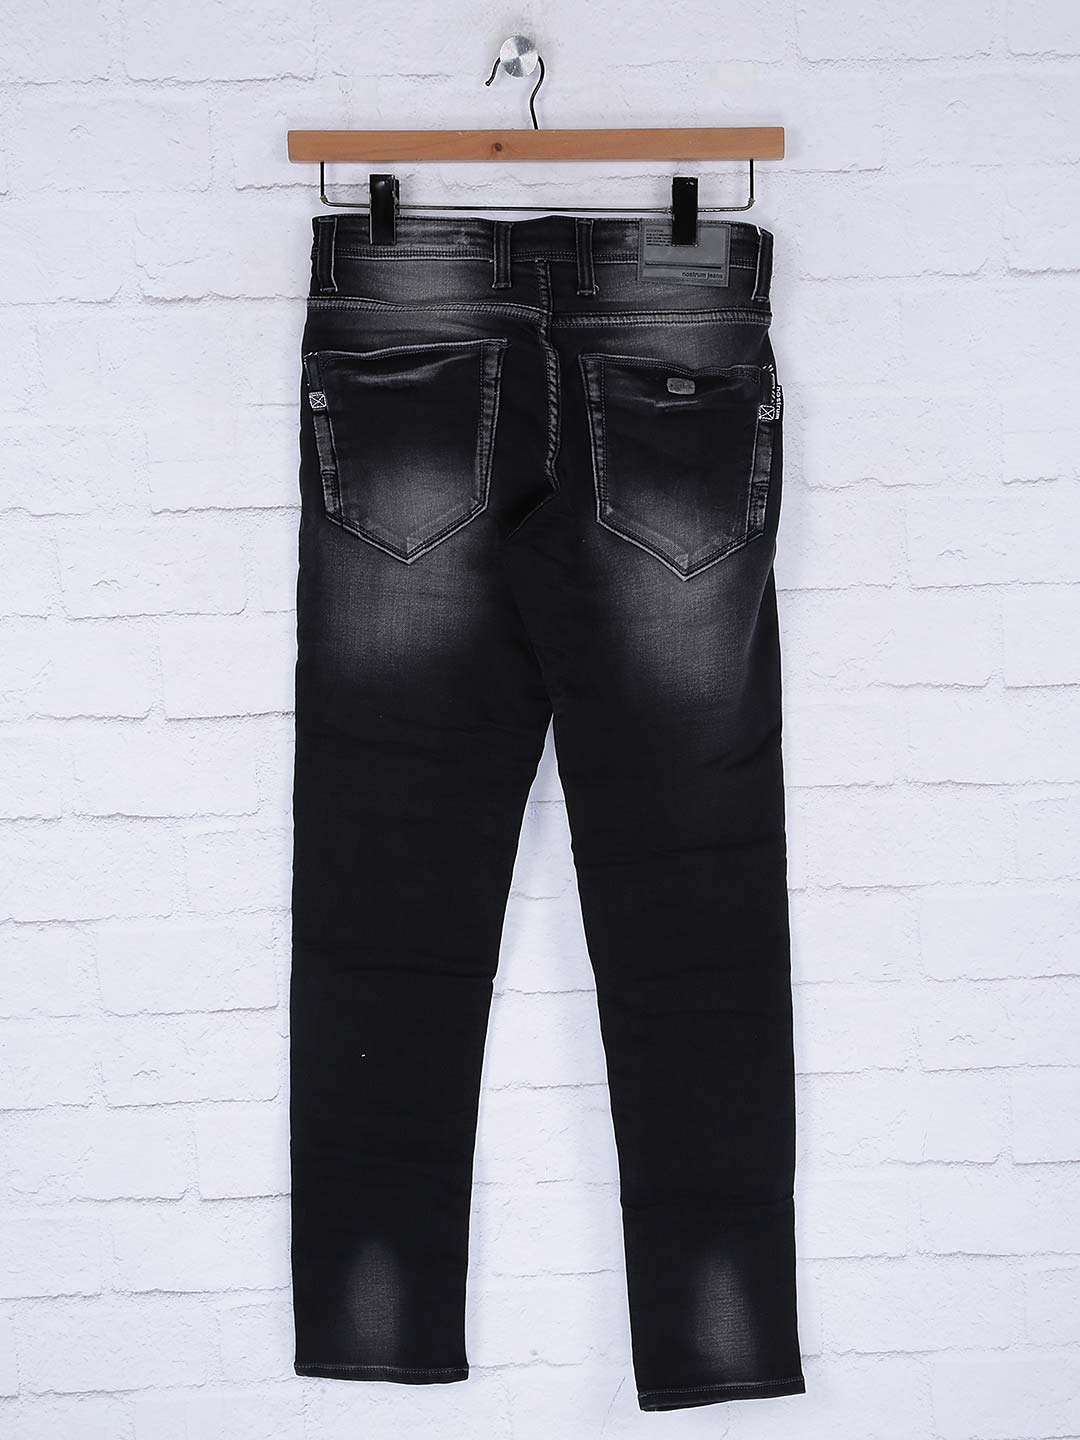 dark black jeans